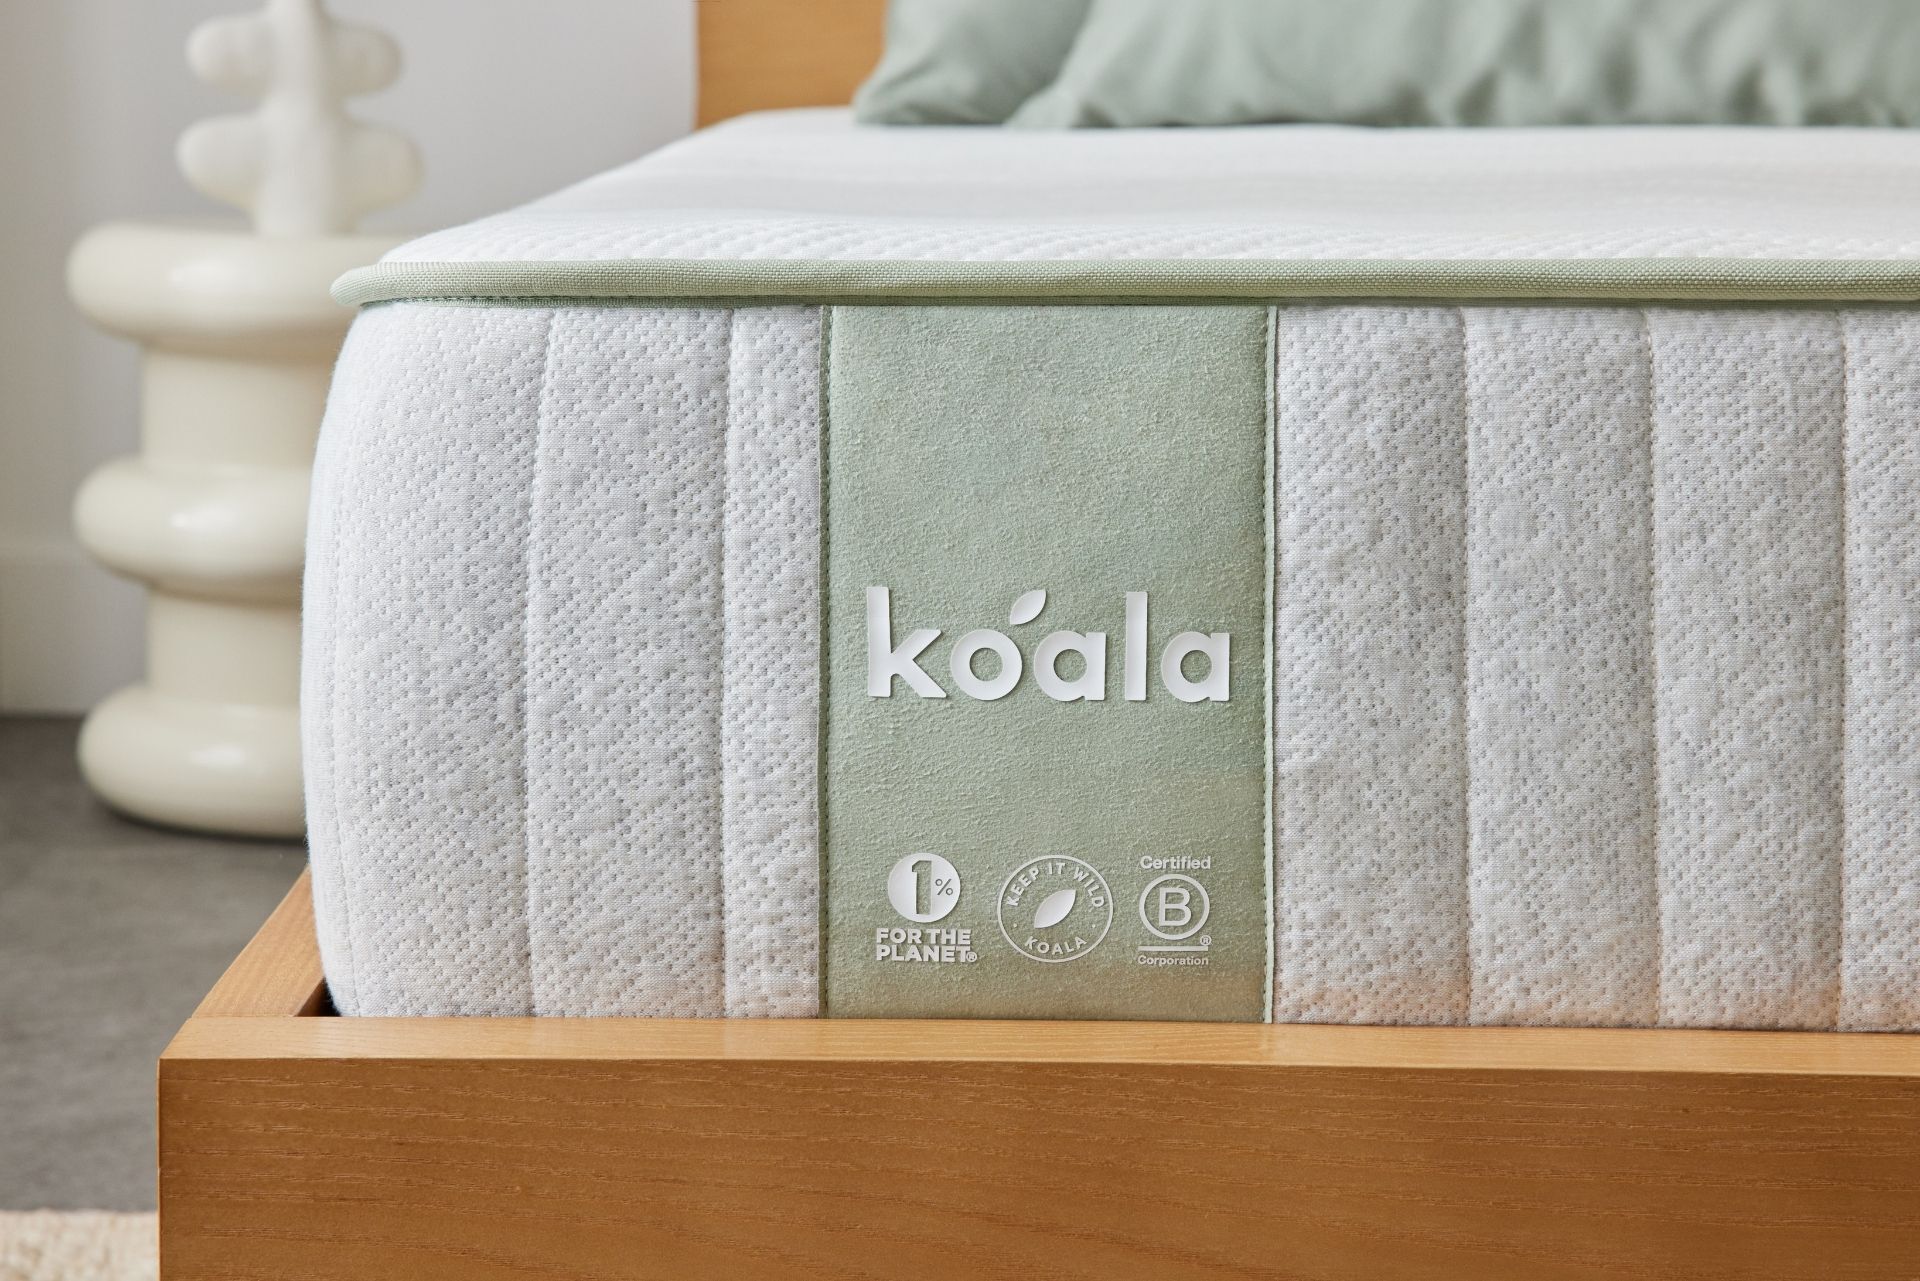 The Koala SE Mattress sits on a bed frame.